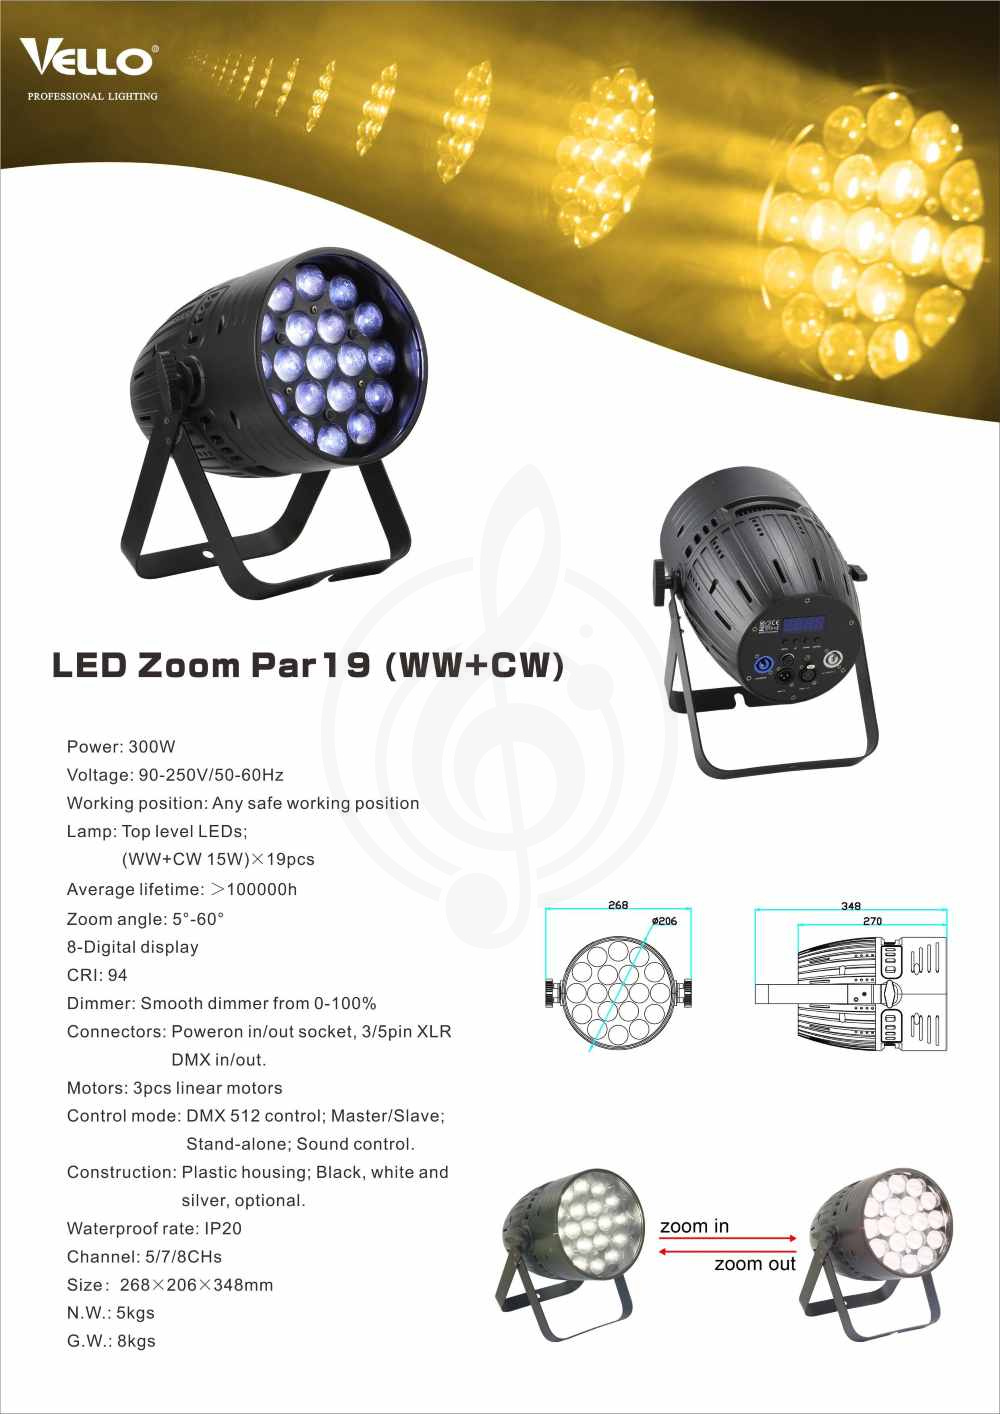 Заливной светильник (LED wash) Заливные светильники (LED wash) Vello Vello LED Zoompar CW+WW (2in1) Светодиодный прожектор с функцией зум 19*15W LED Zoompar-19 (2in1) - фото 6